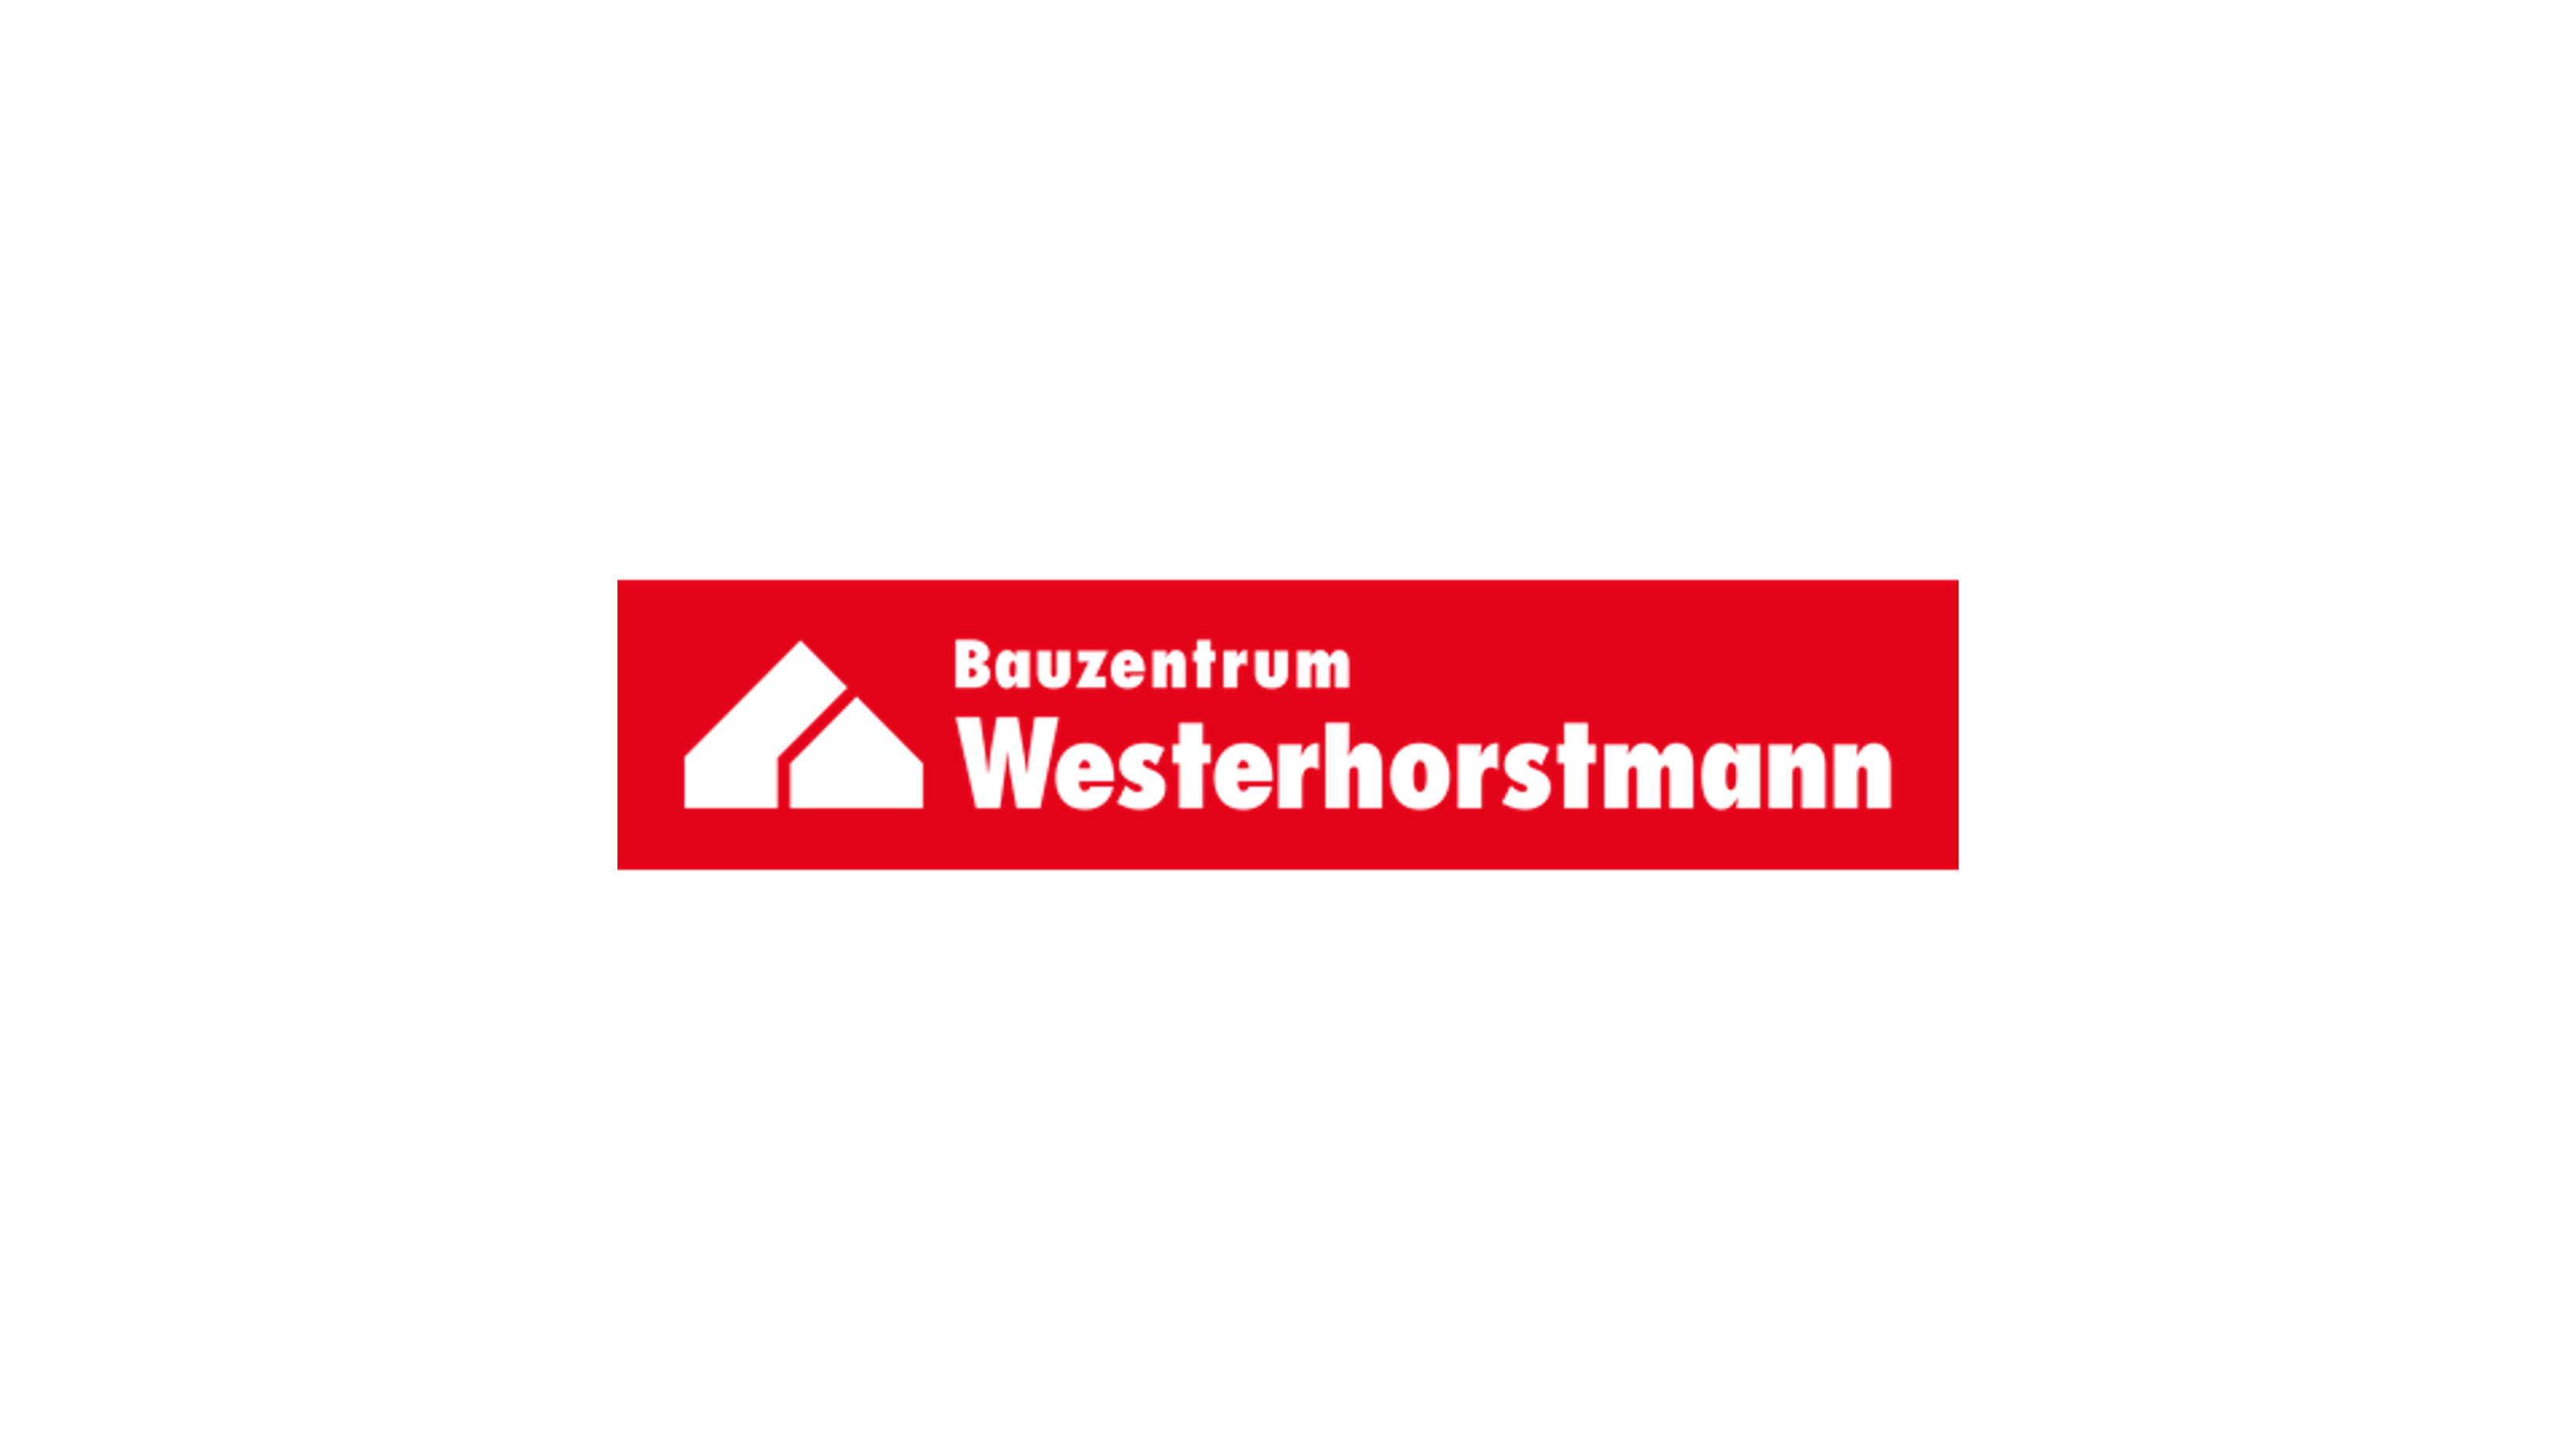 Hauptsponsor - Bauzentrum Westerhorstmann